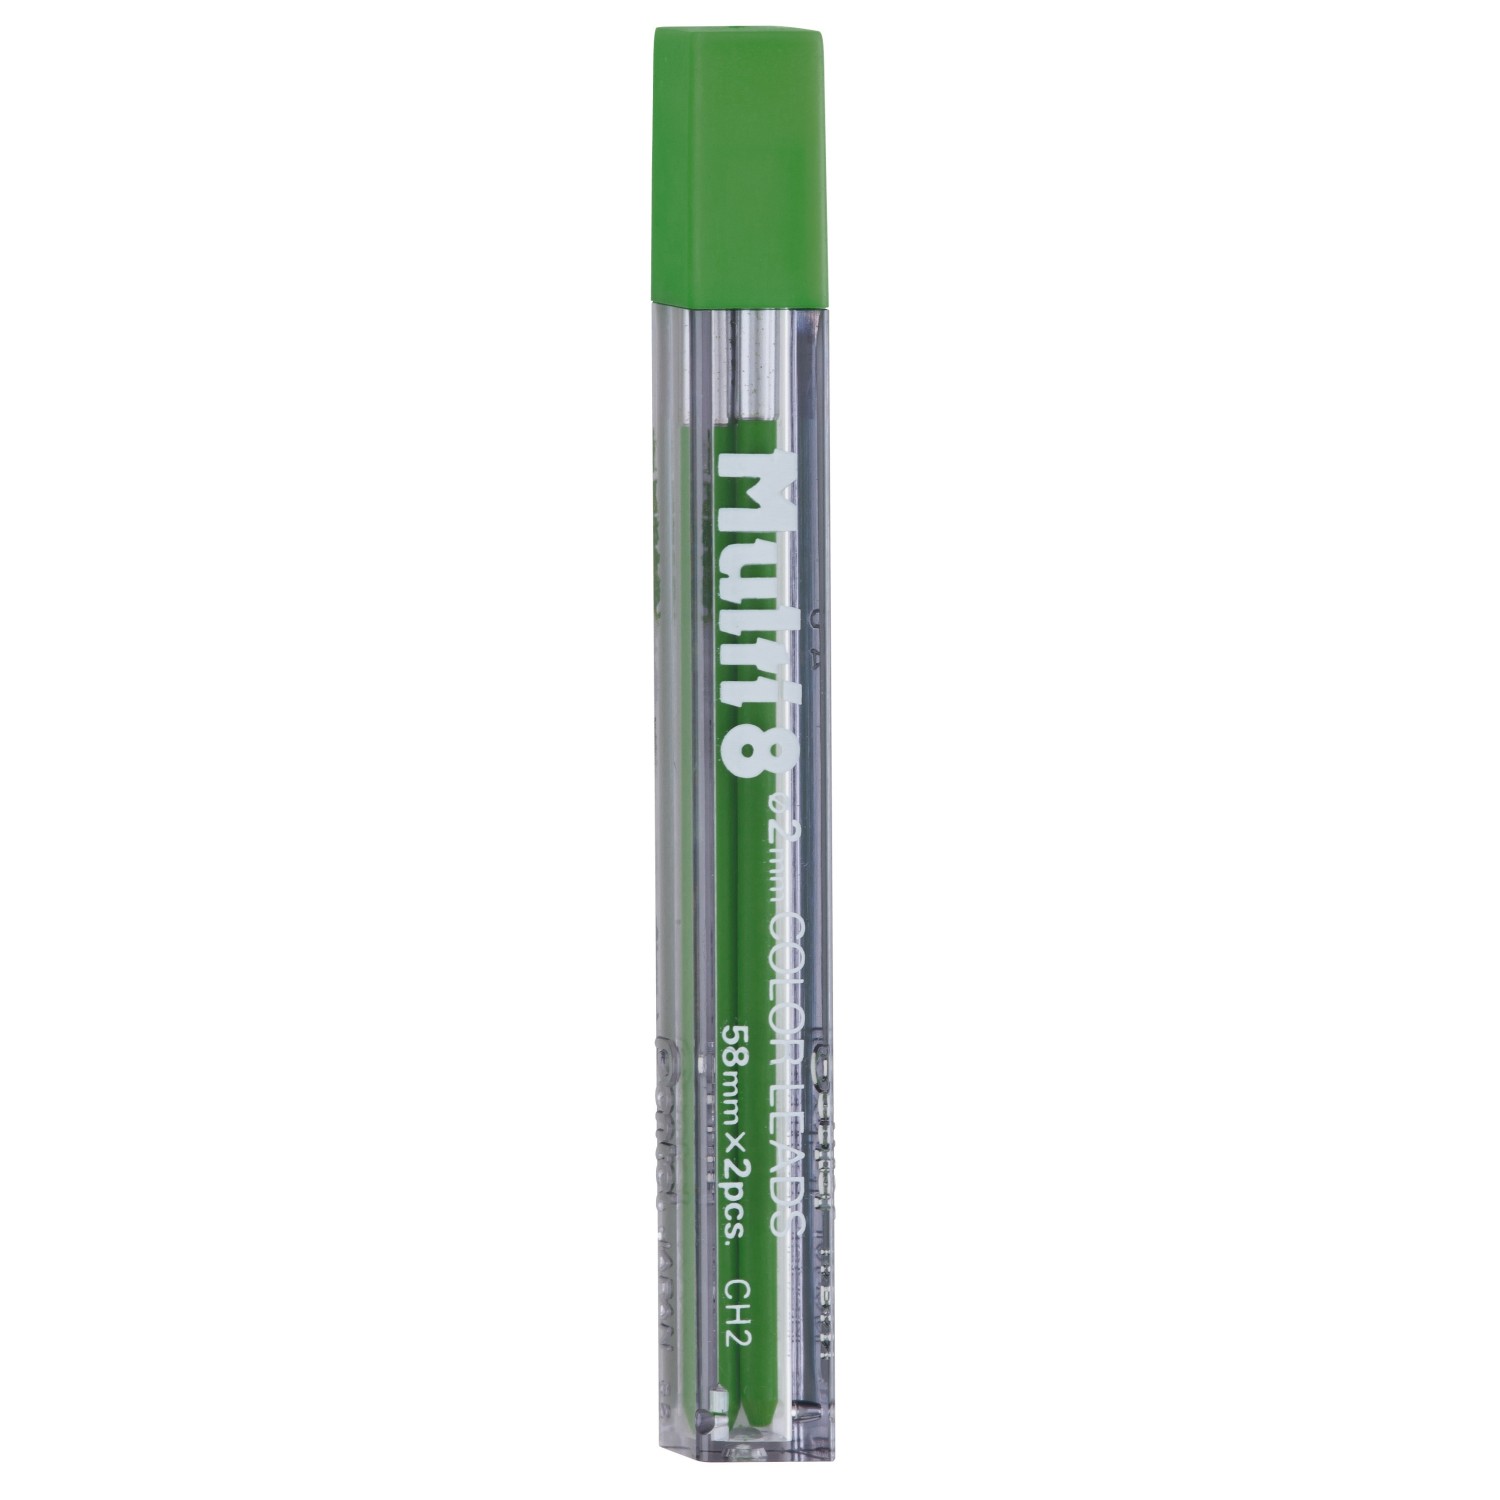 Pentel Multi 8 Color Leads, 2mm Green